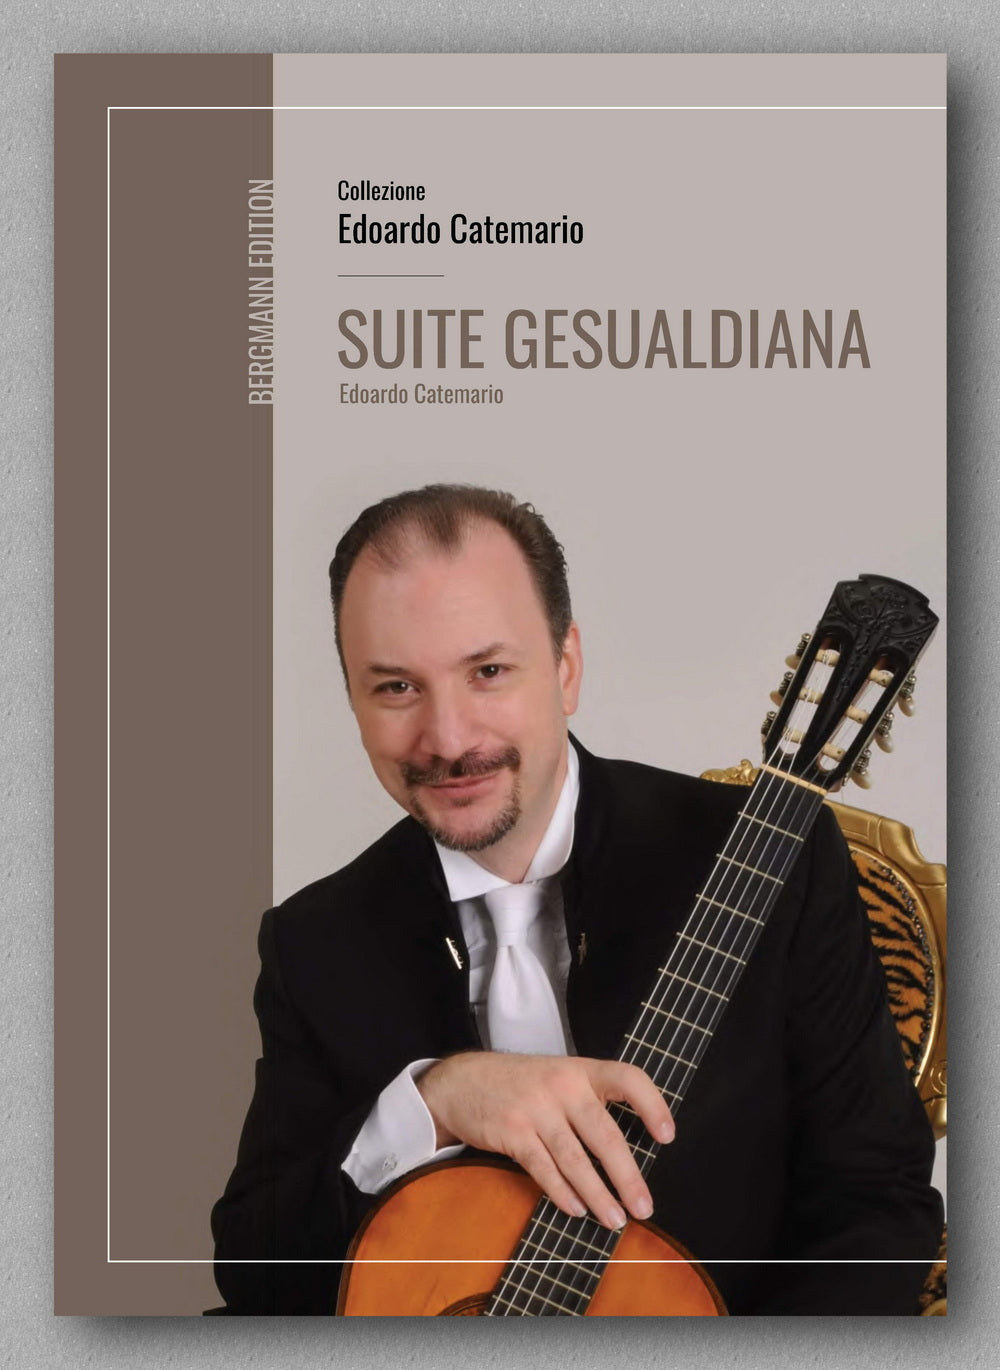 Suite Gesualdiana by Edoardo Catemario - preview of the cover